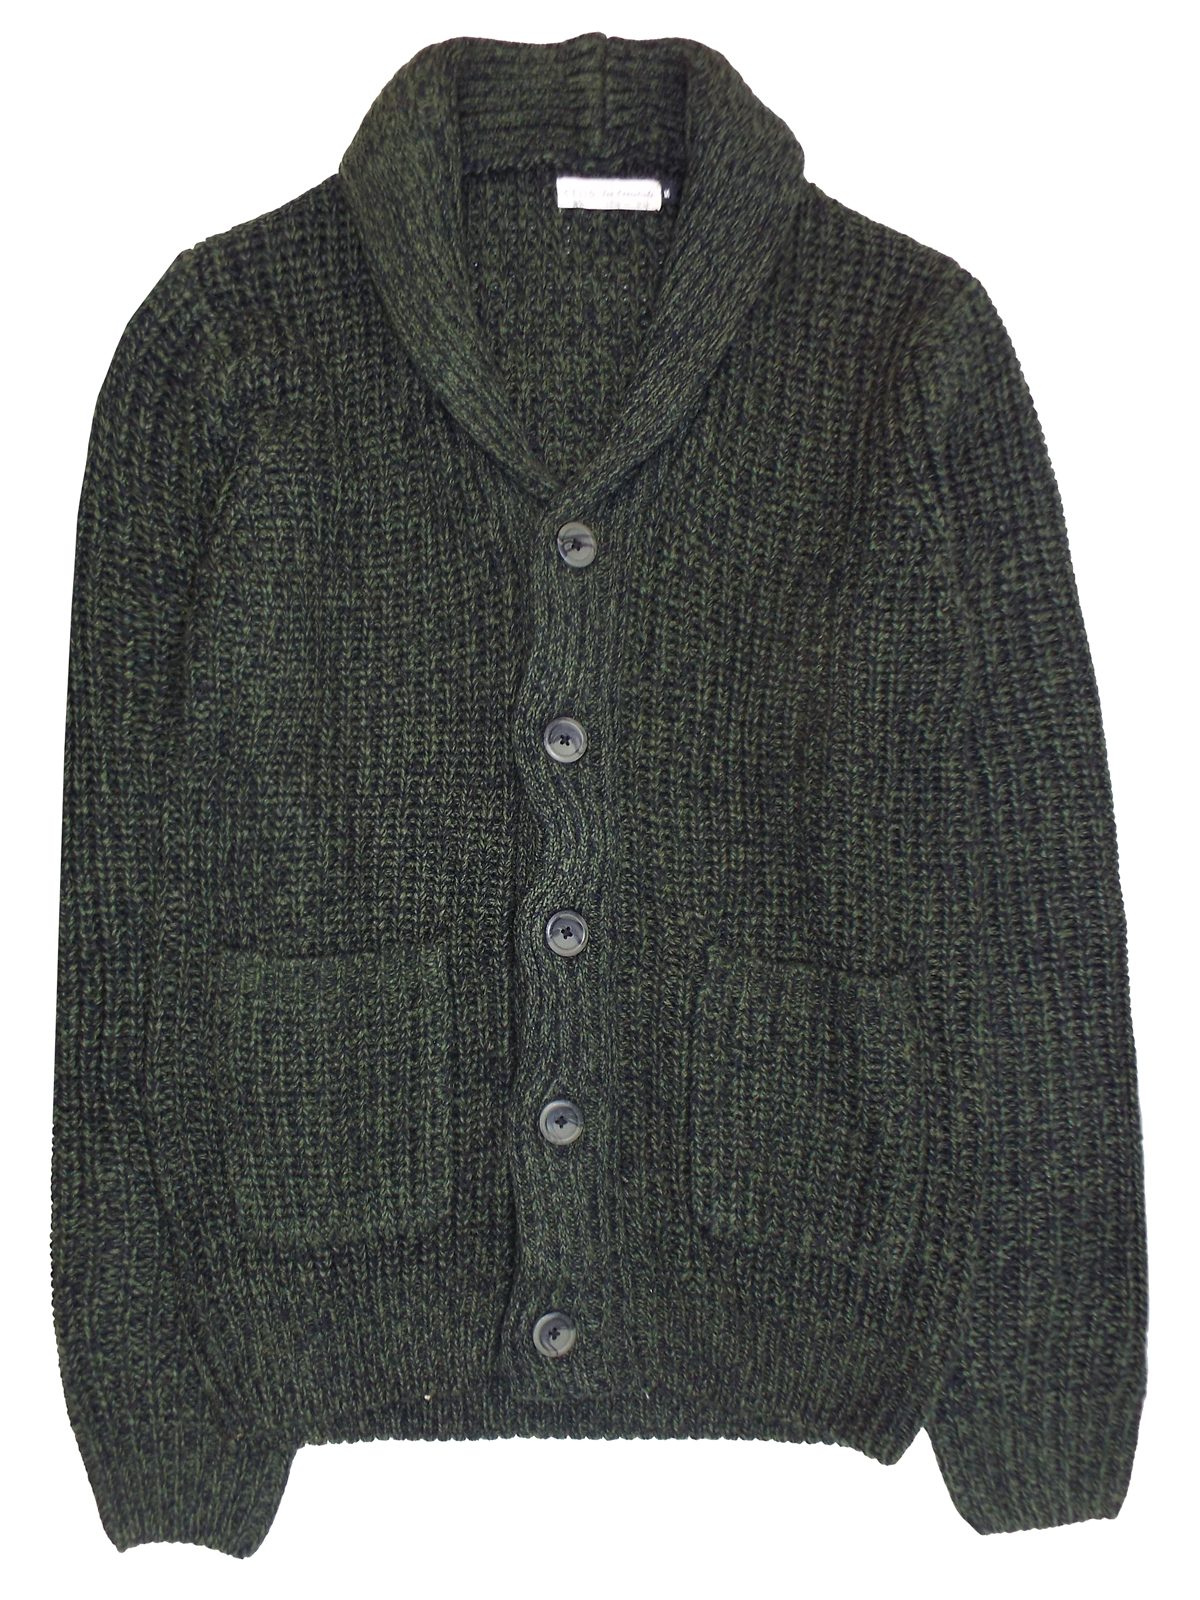 Celio - - Celio DARK-GREEN Shawl Collar Button Through Cardigan - Size ...